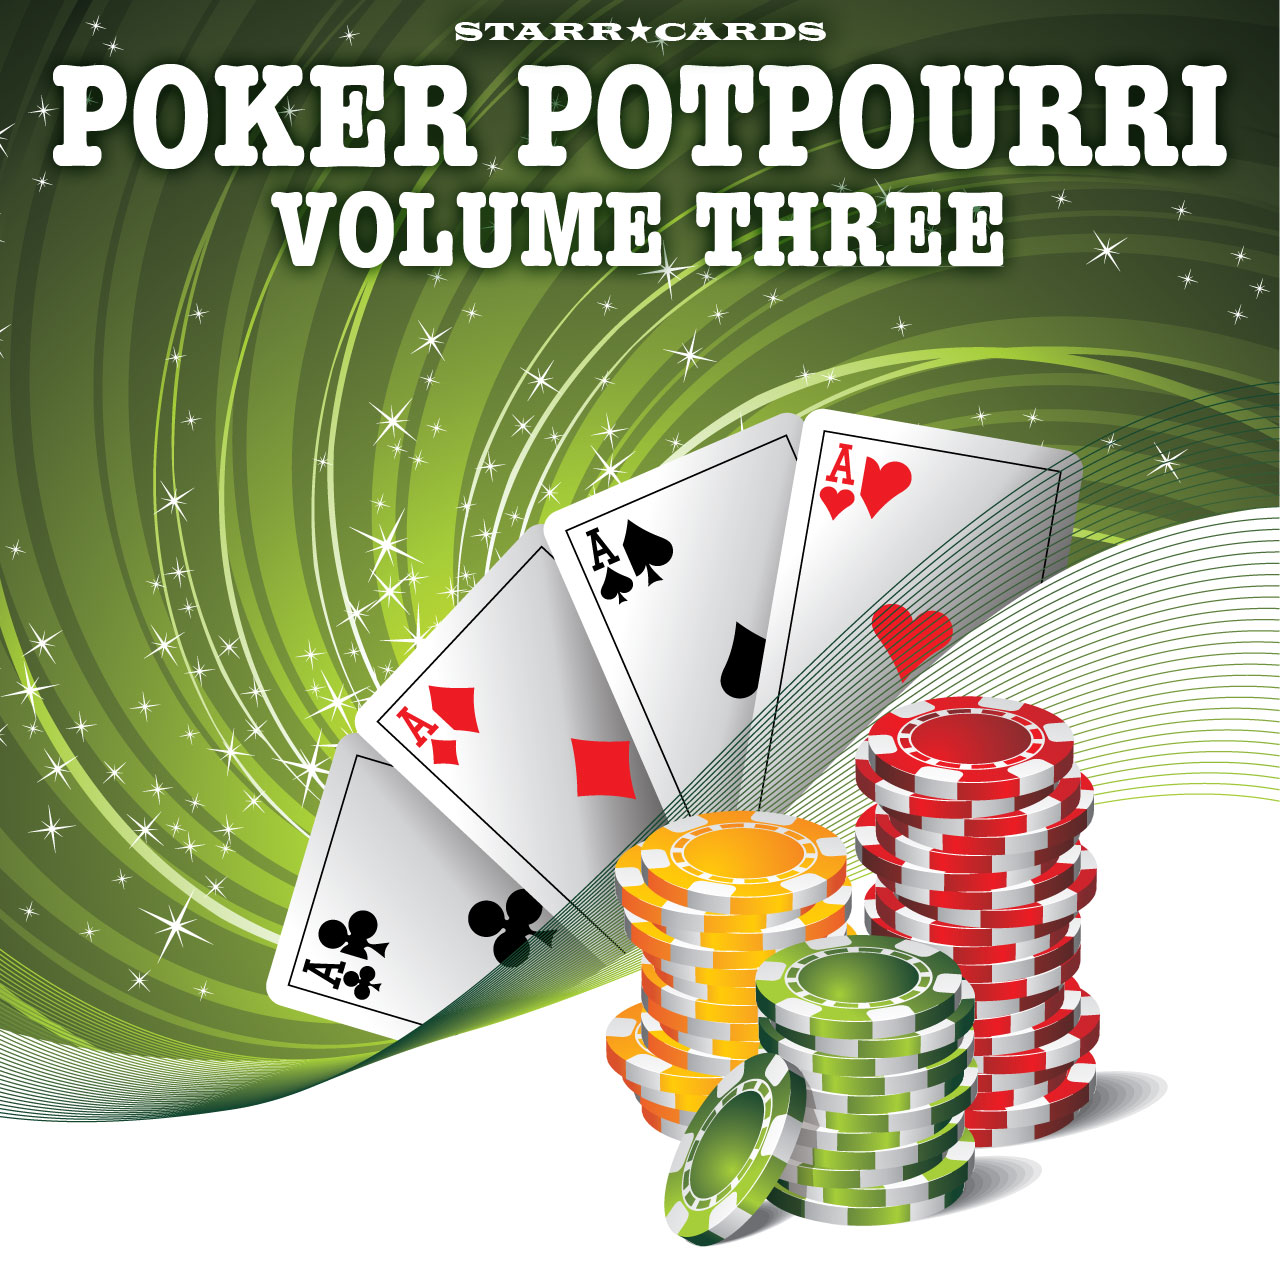 Starr Cards Poker Potpourri Volume Three starring Phil Laak